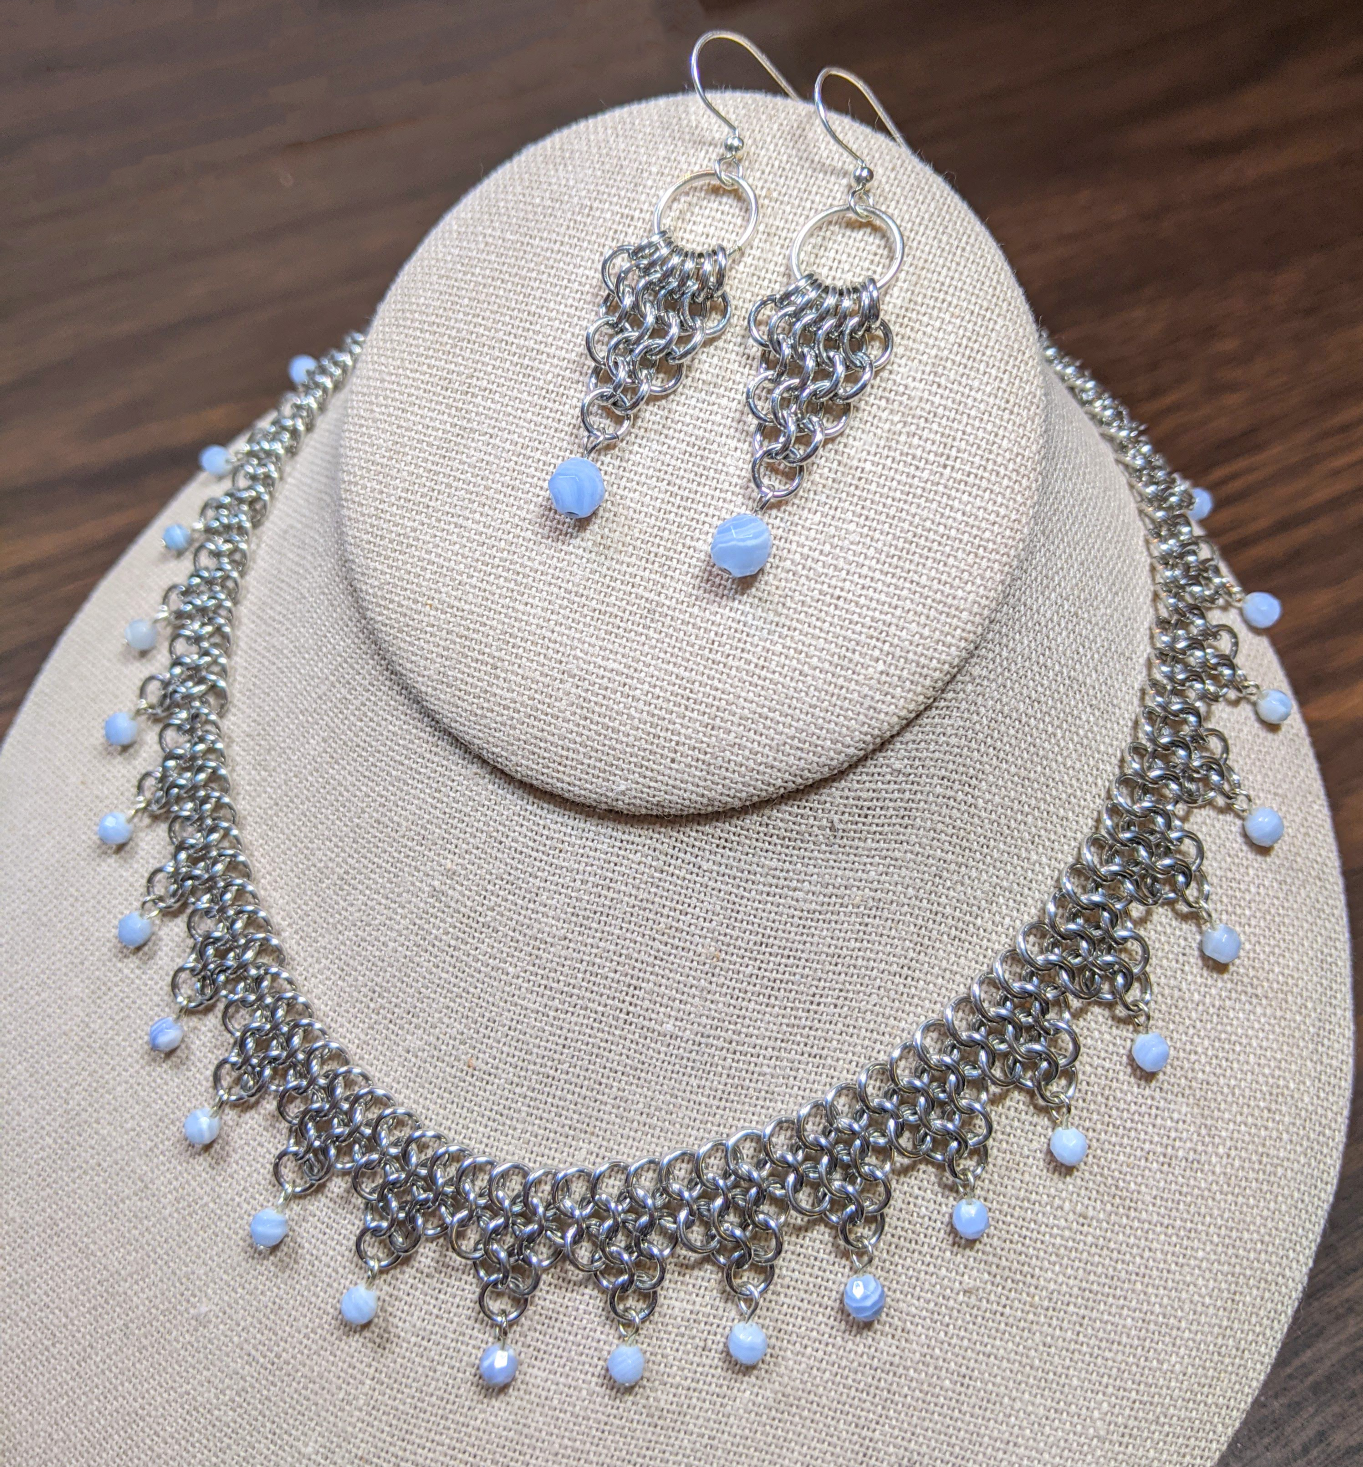 3 Easy and Elegant Beaded Pearl Bracelet Tutorials by Sonysree Creations /  The Beading Gem